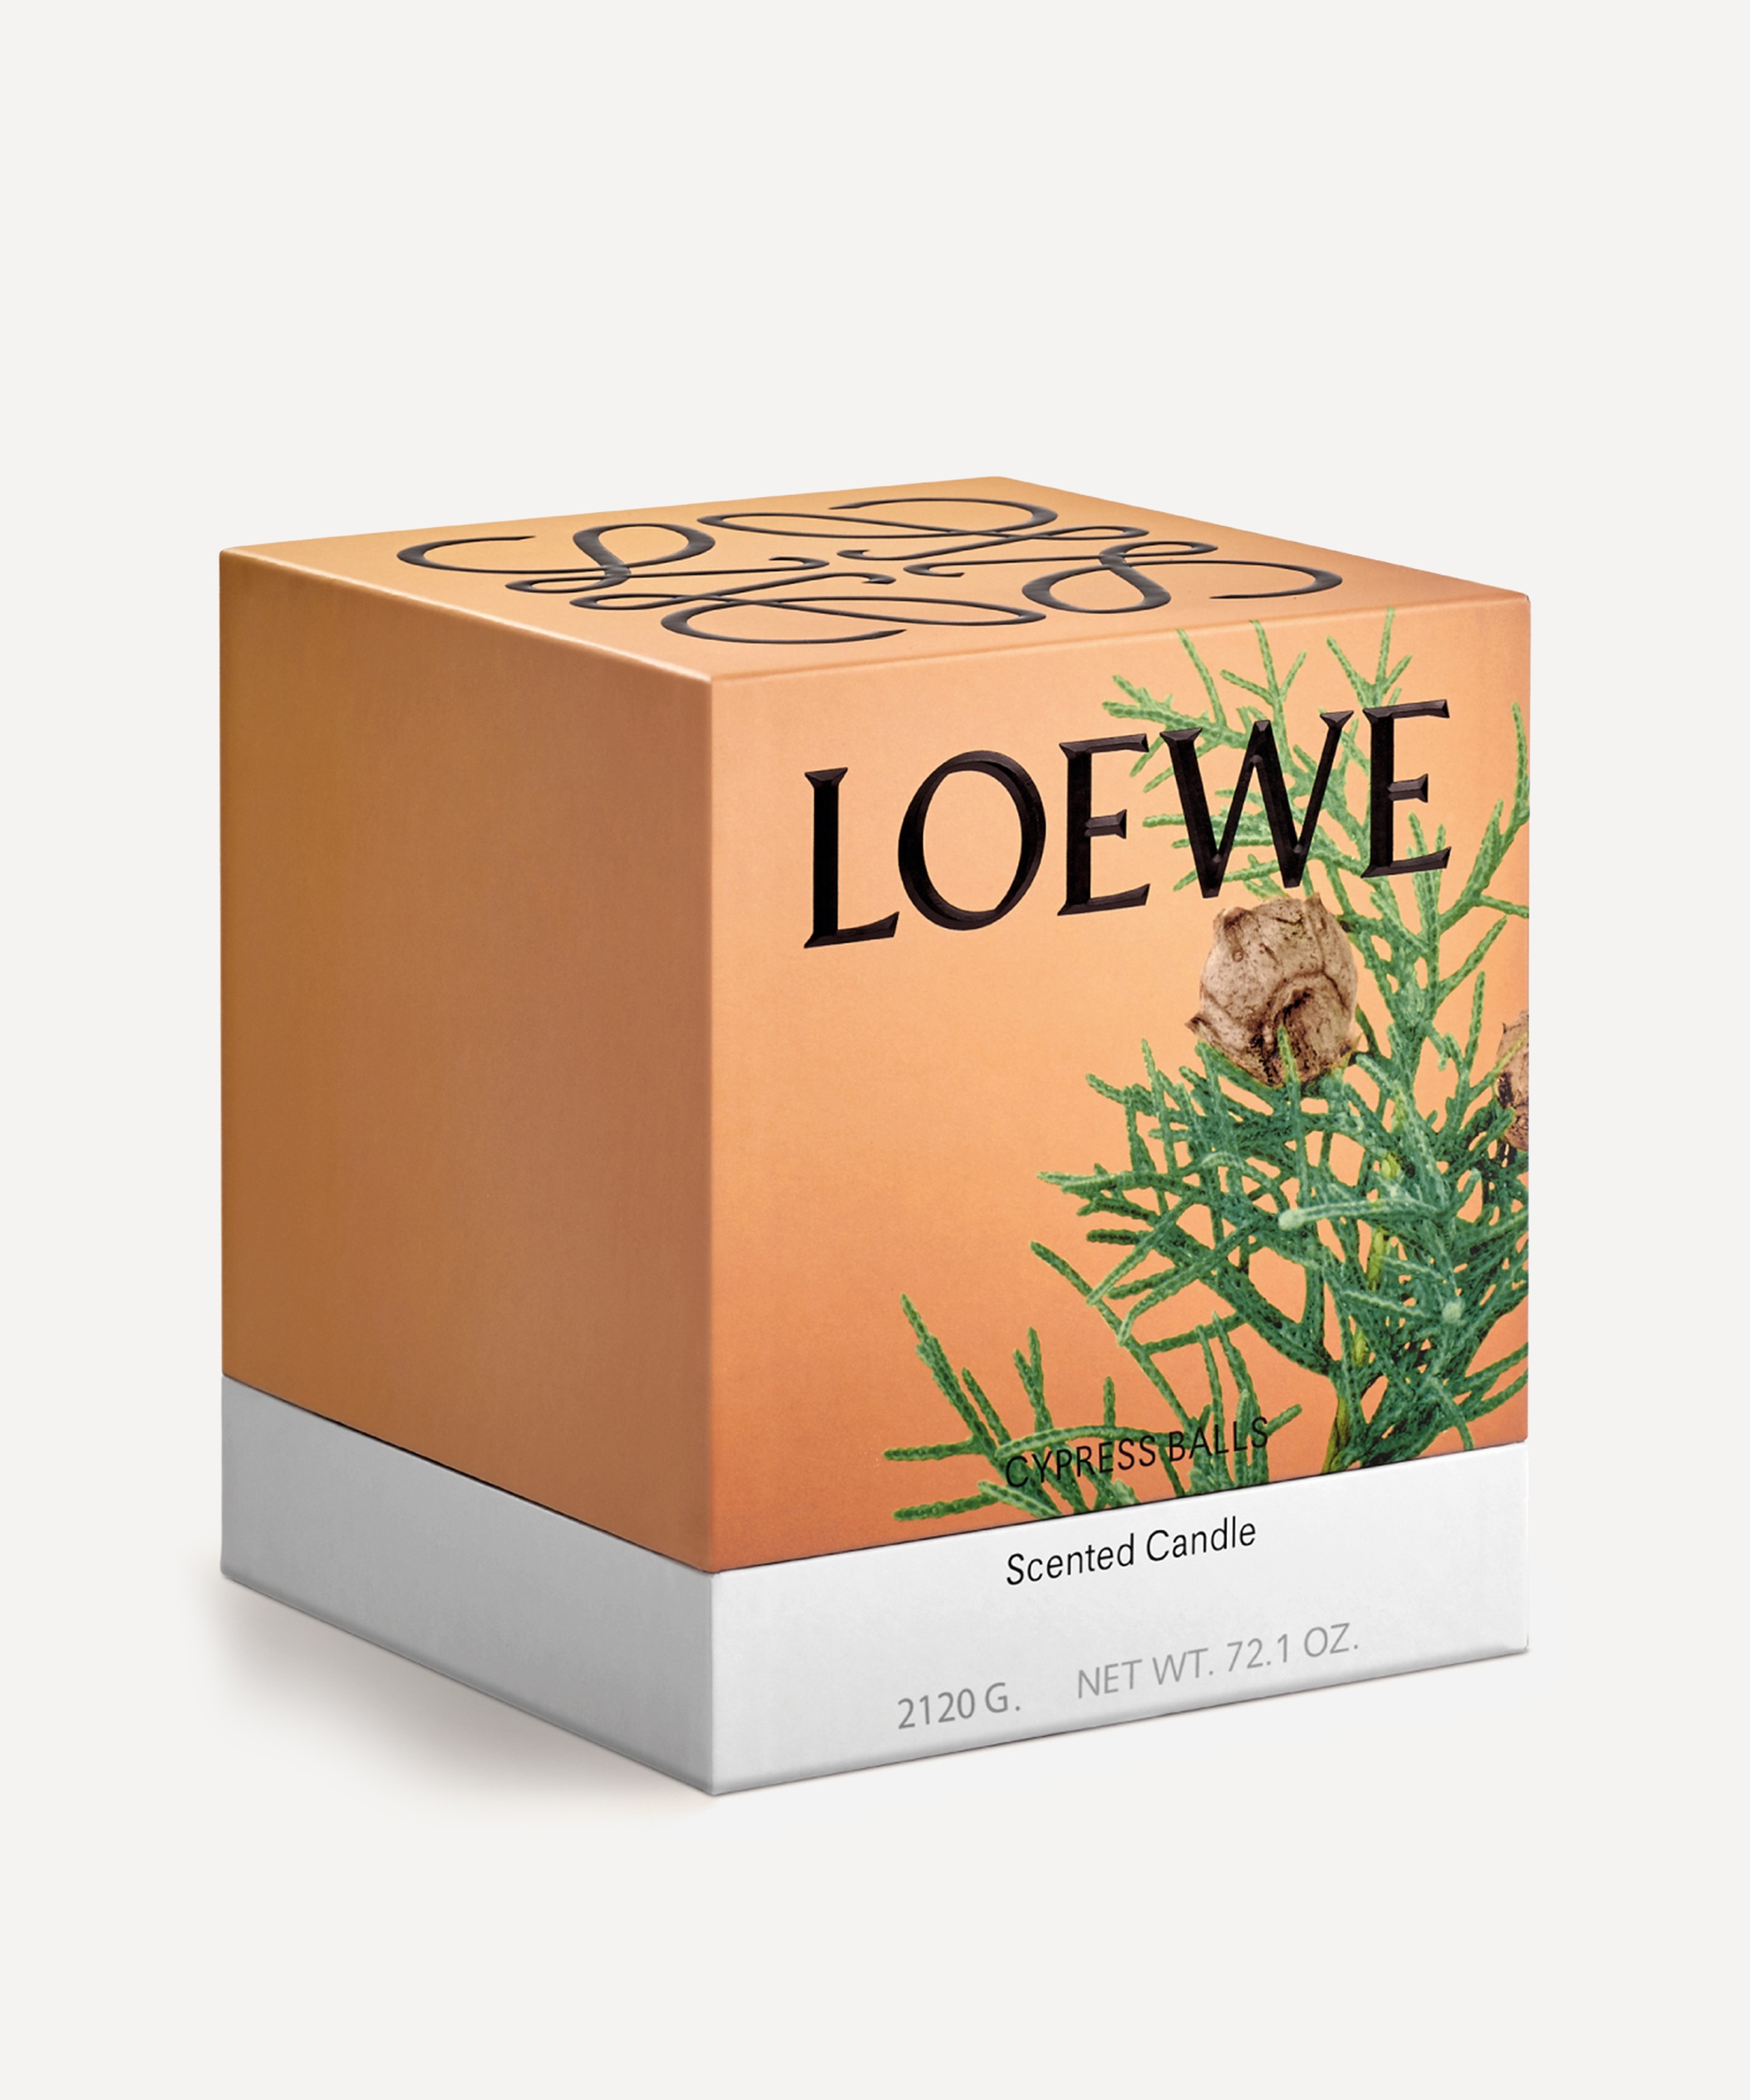 Loewe - Large Cypress Balls Candle 2120g image number 1